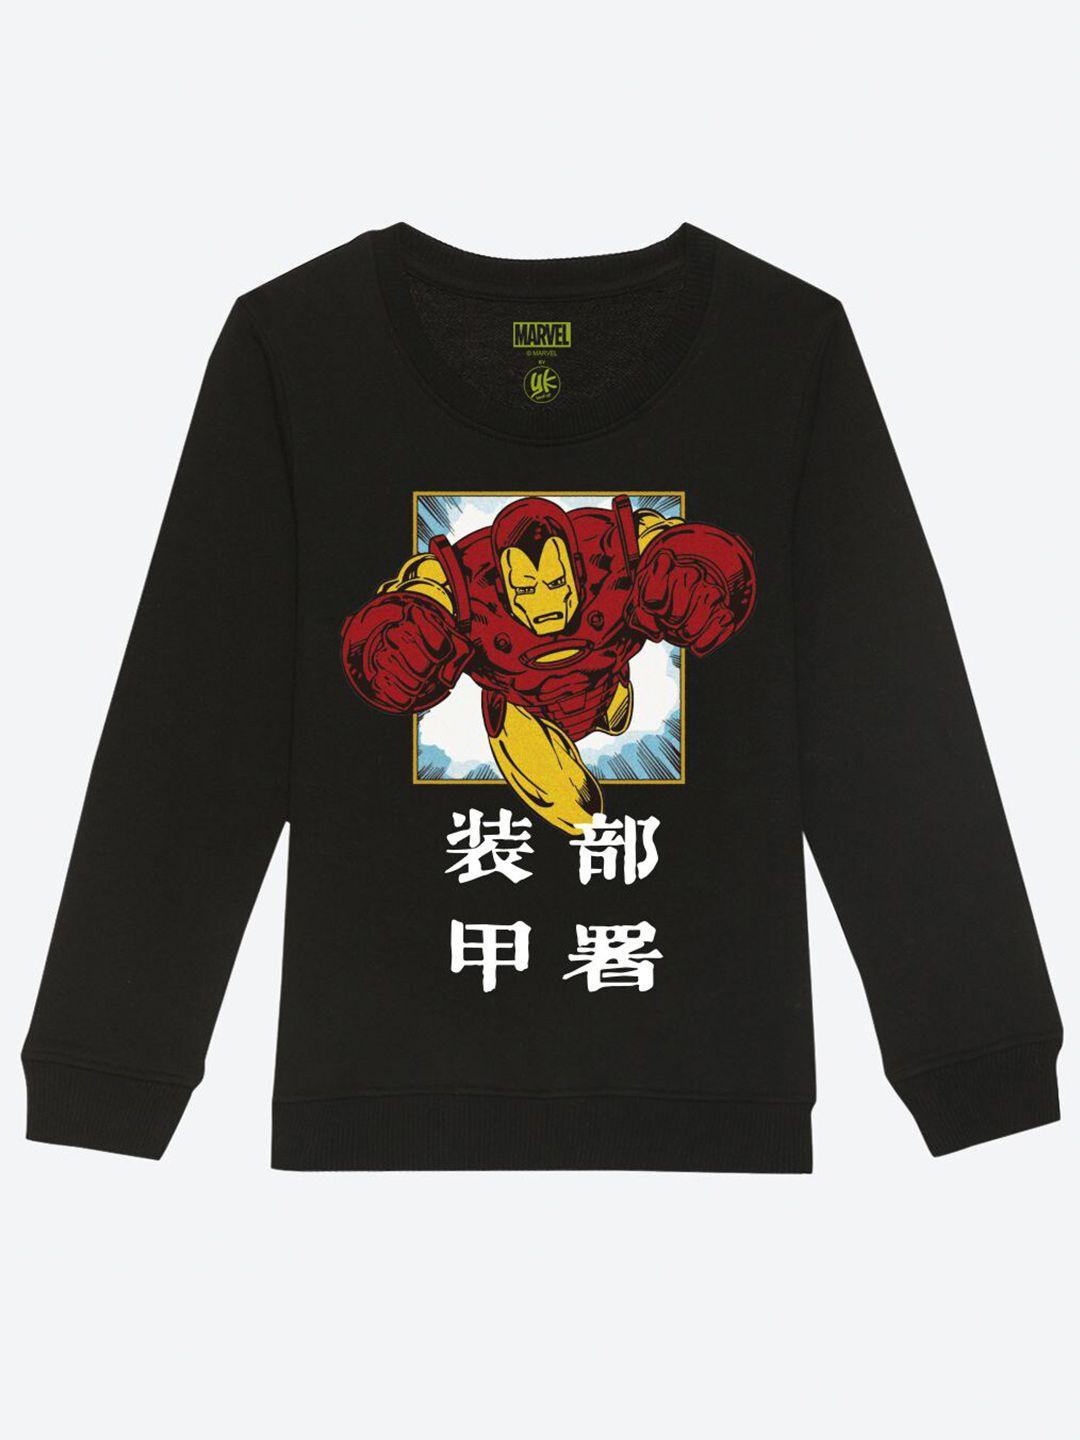 yk marvel boys ironman marvel graphic printed sweatshirt